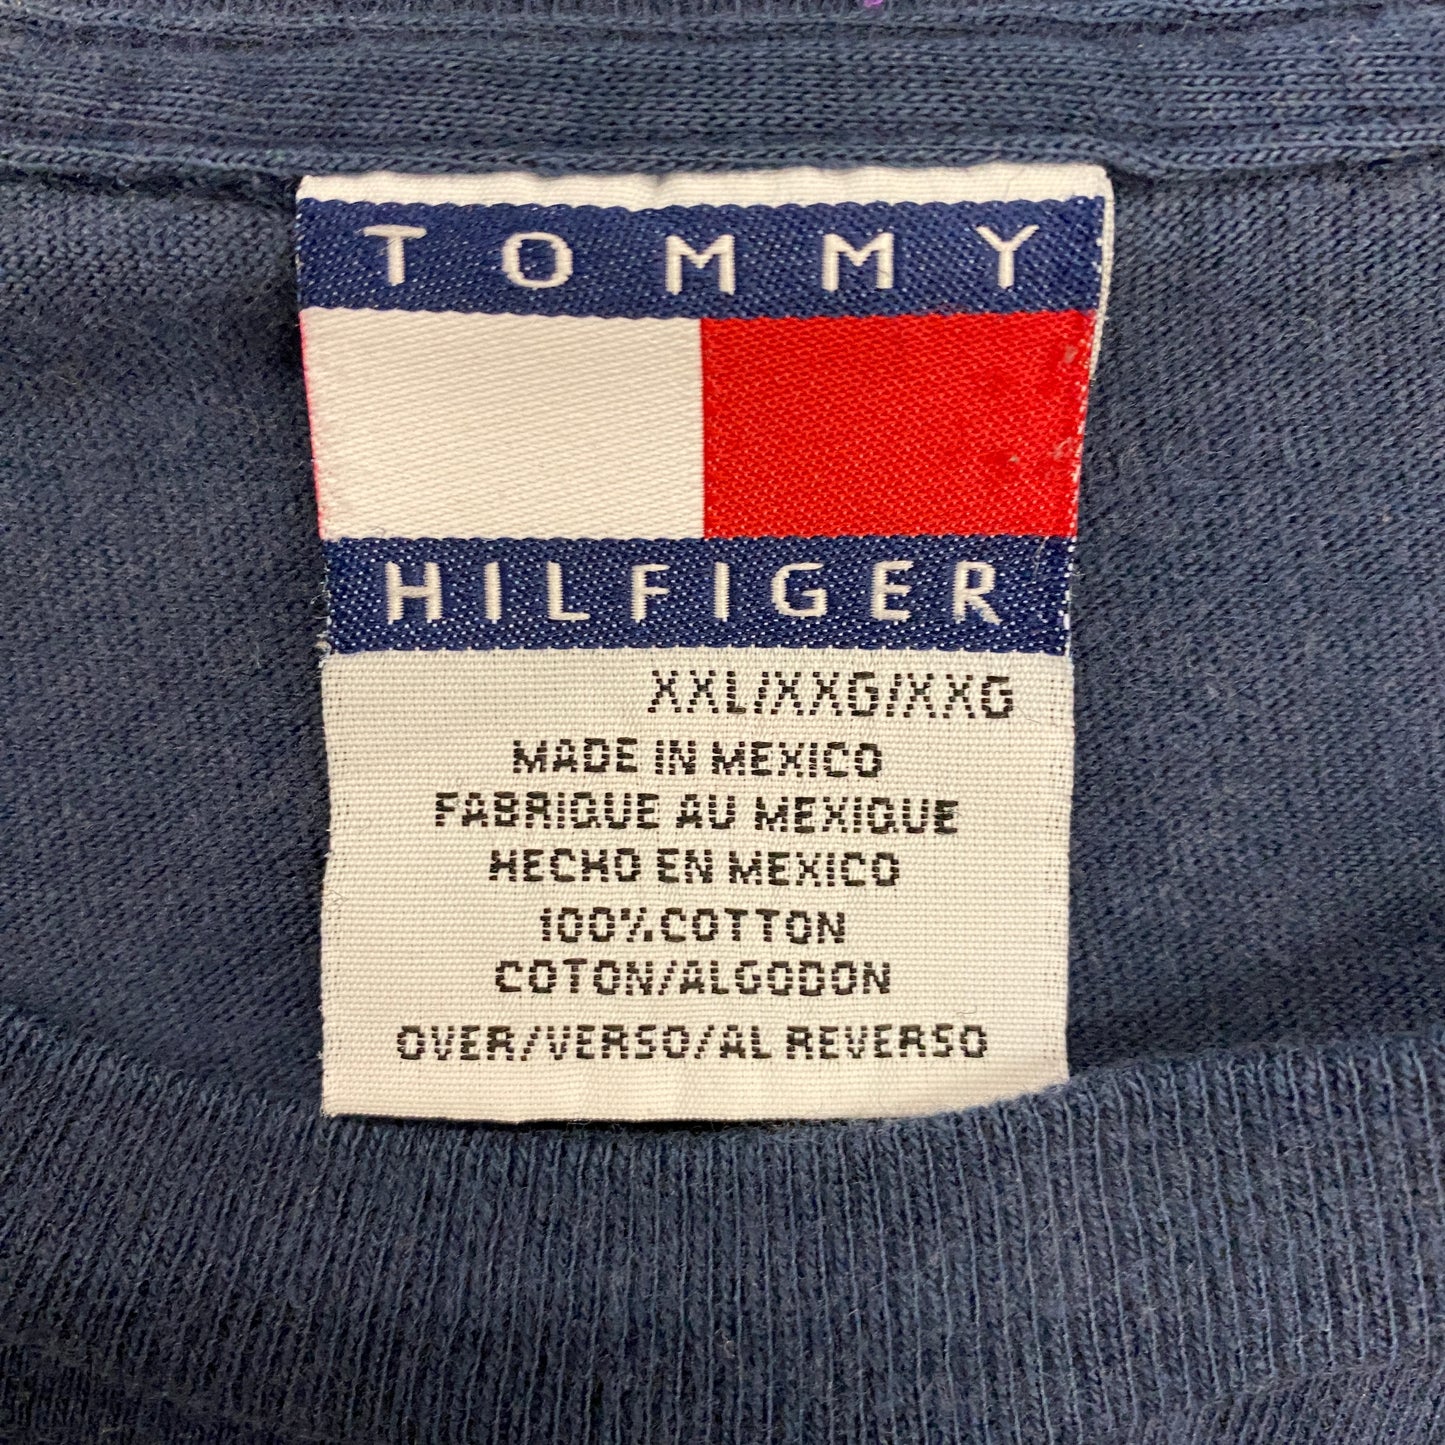 Vintage Tommy Hilfiger Oversized Logo Tee - Size XXL (Fits Boxy XL)